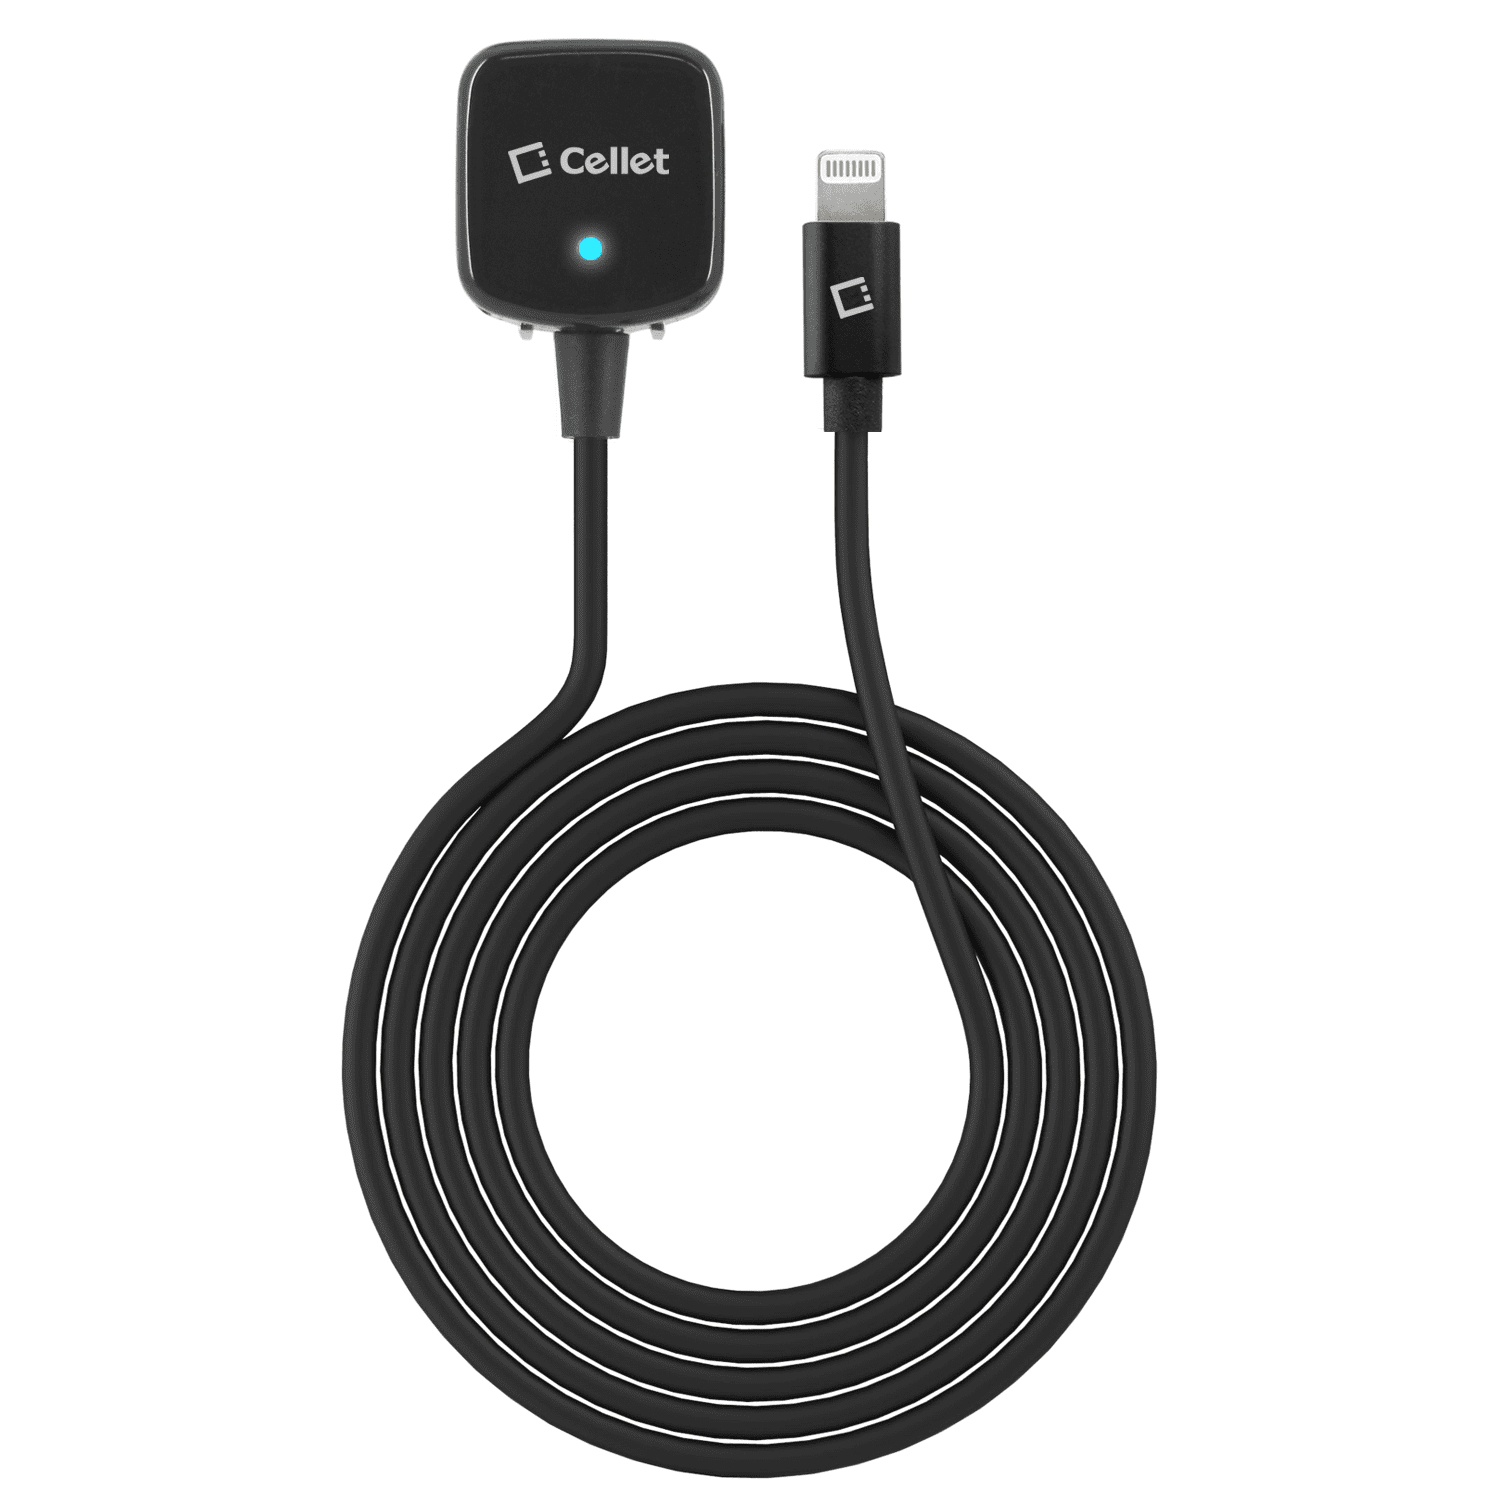 Cable Usb pour Chargeur compatible iPhone 4